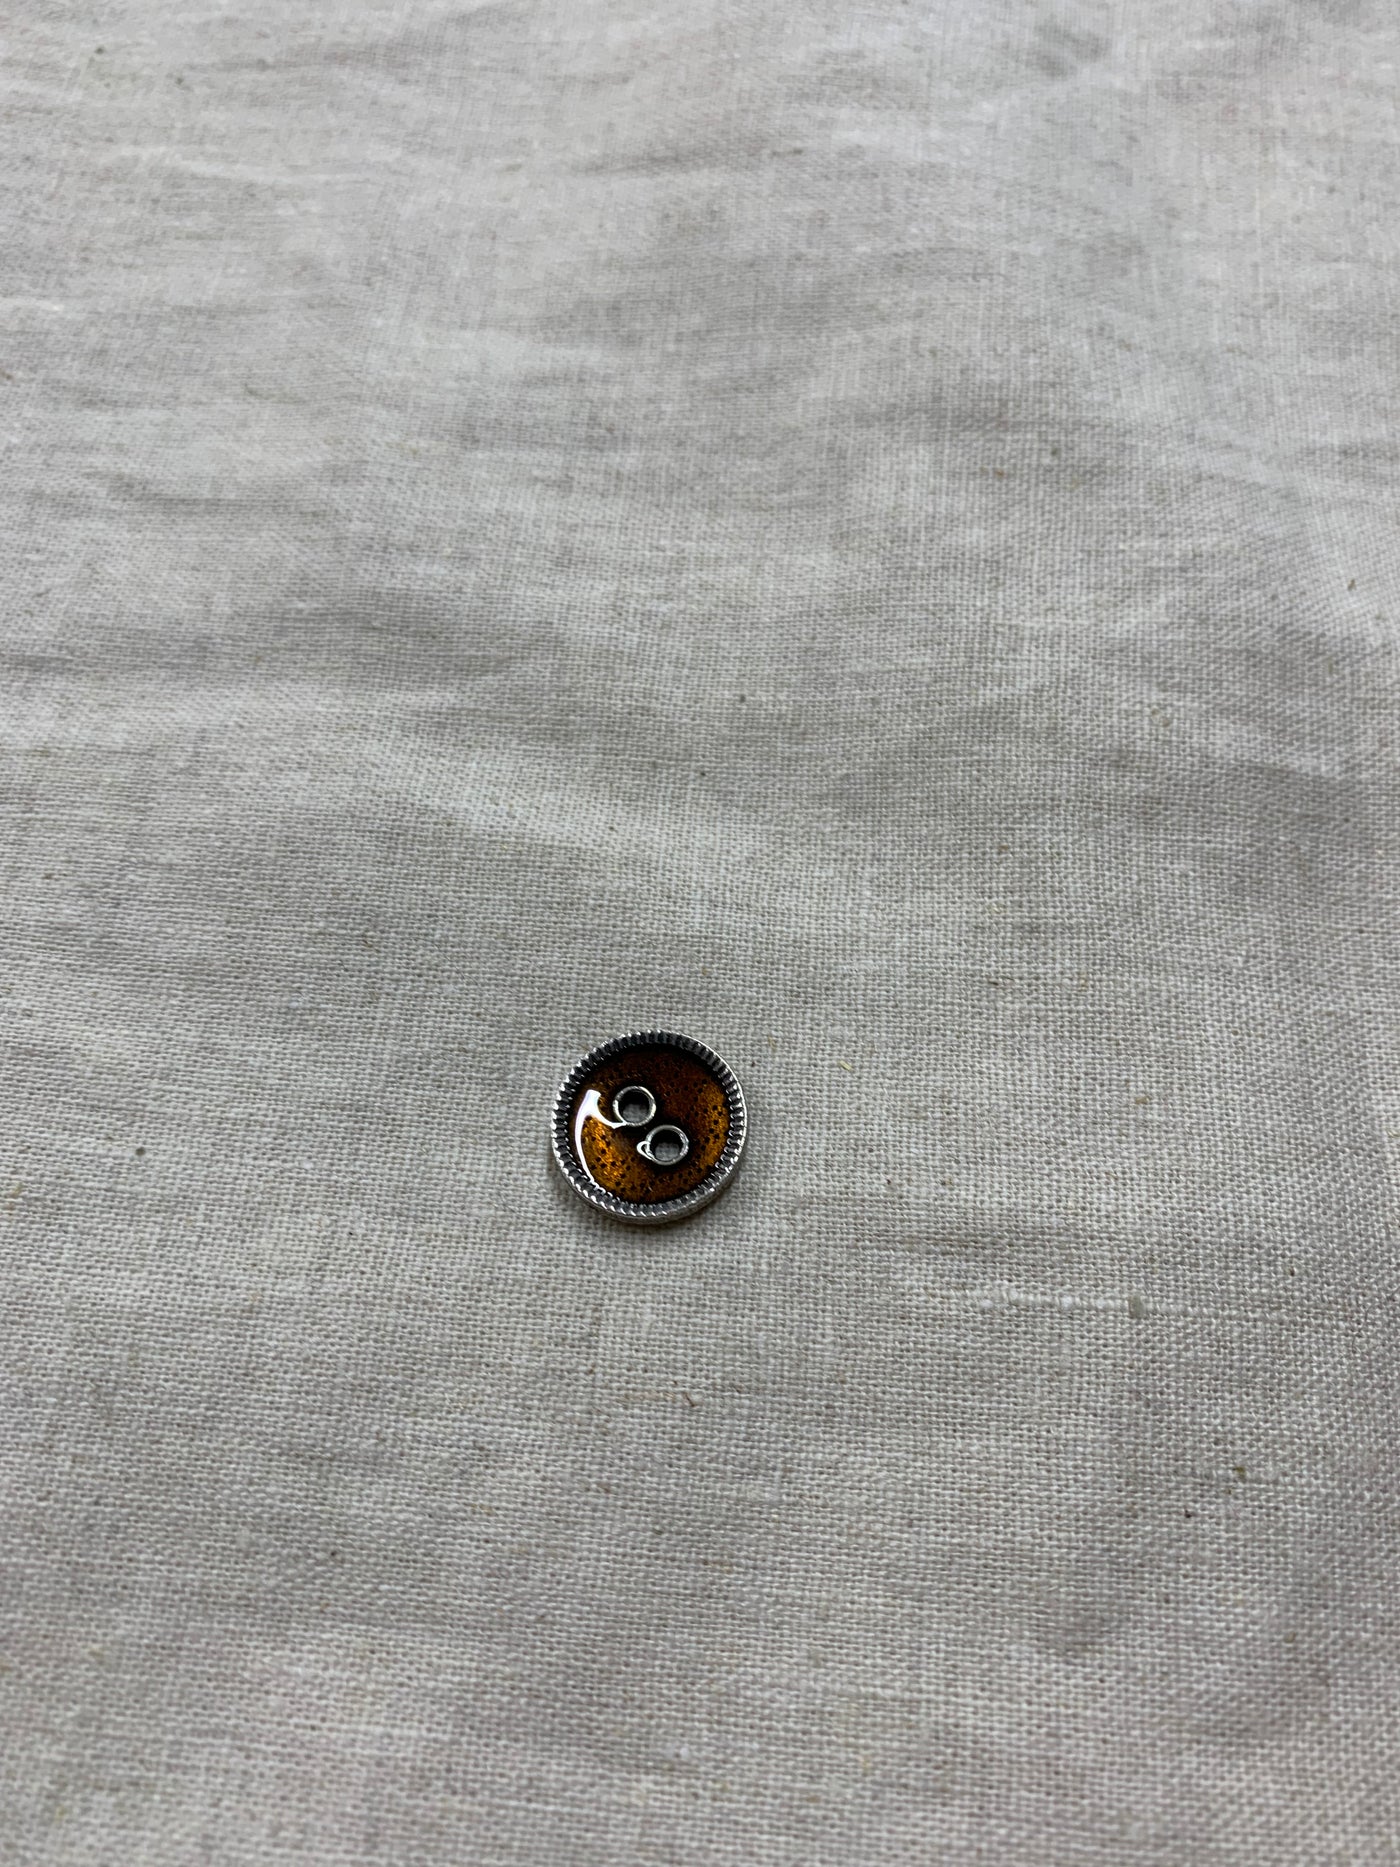 Metal Rim Buttons (15mm)